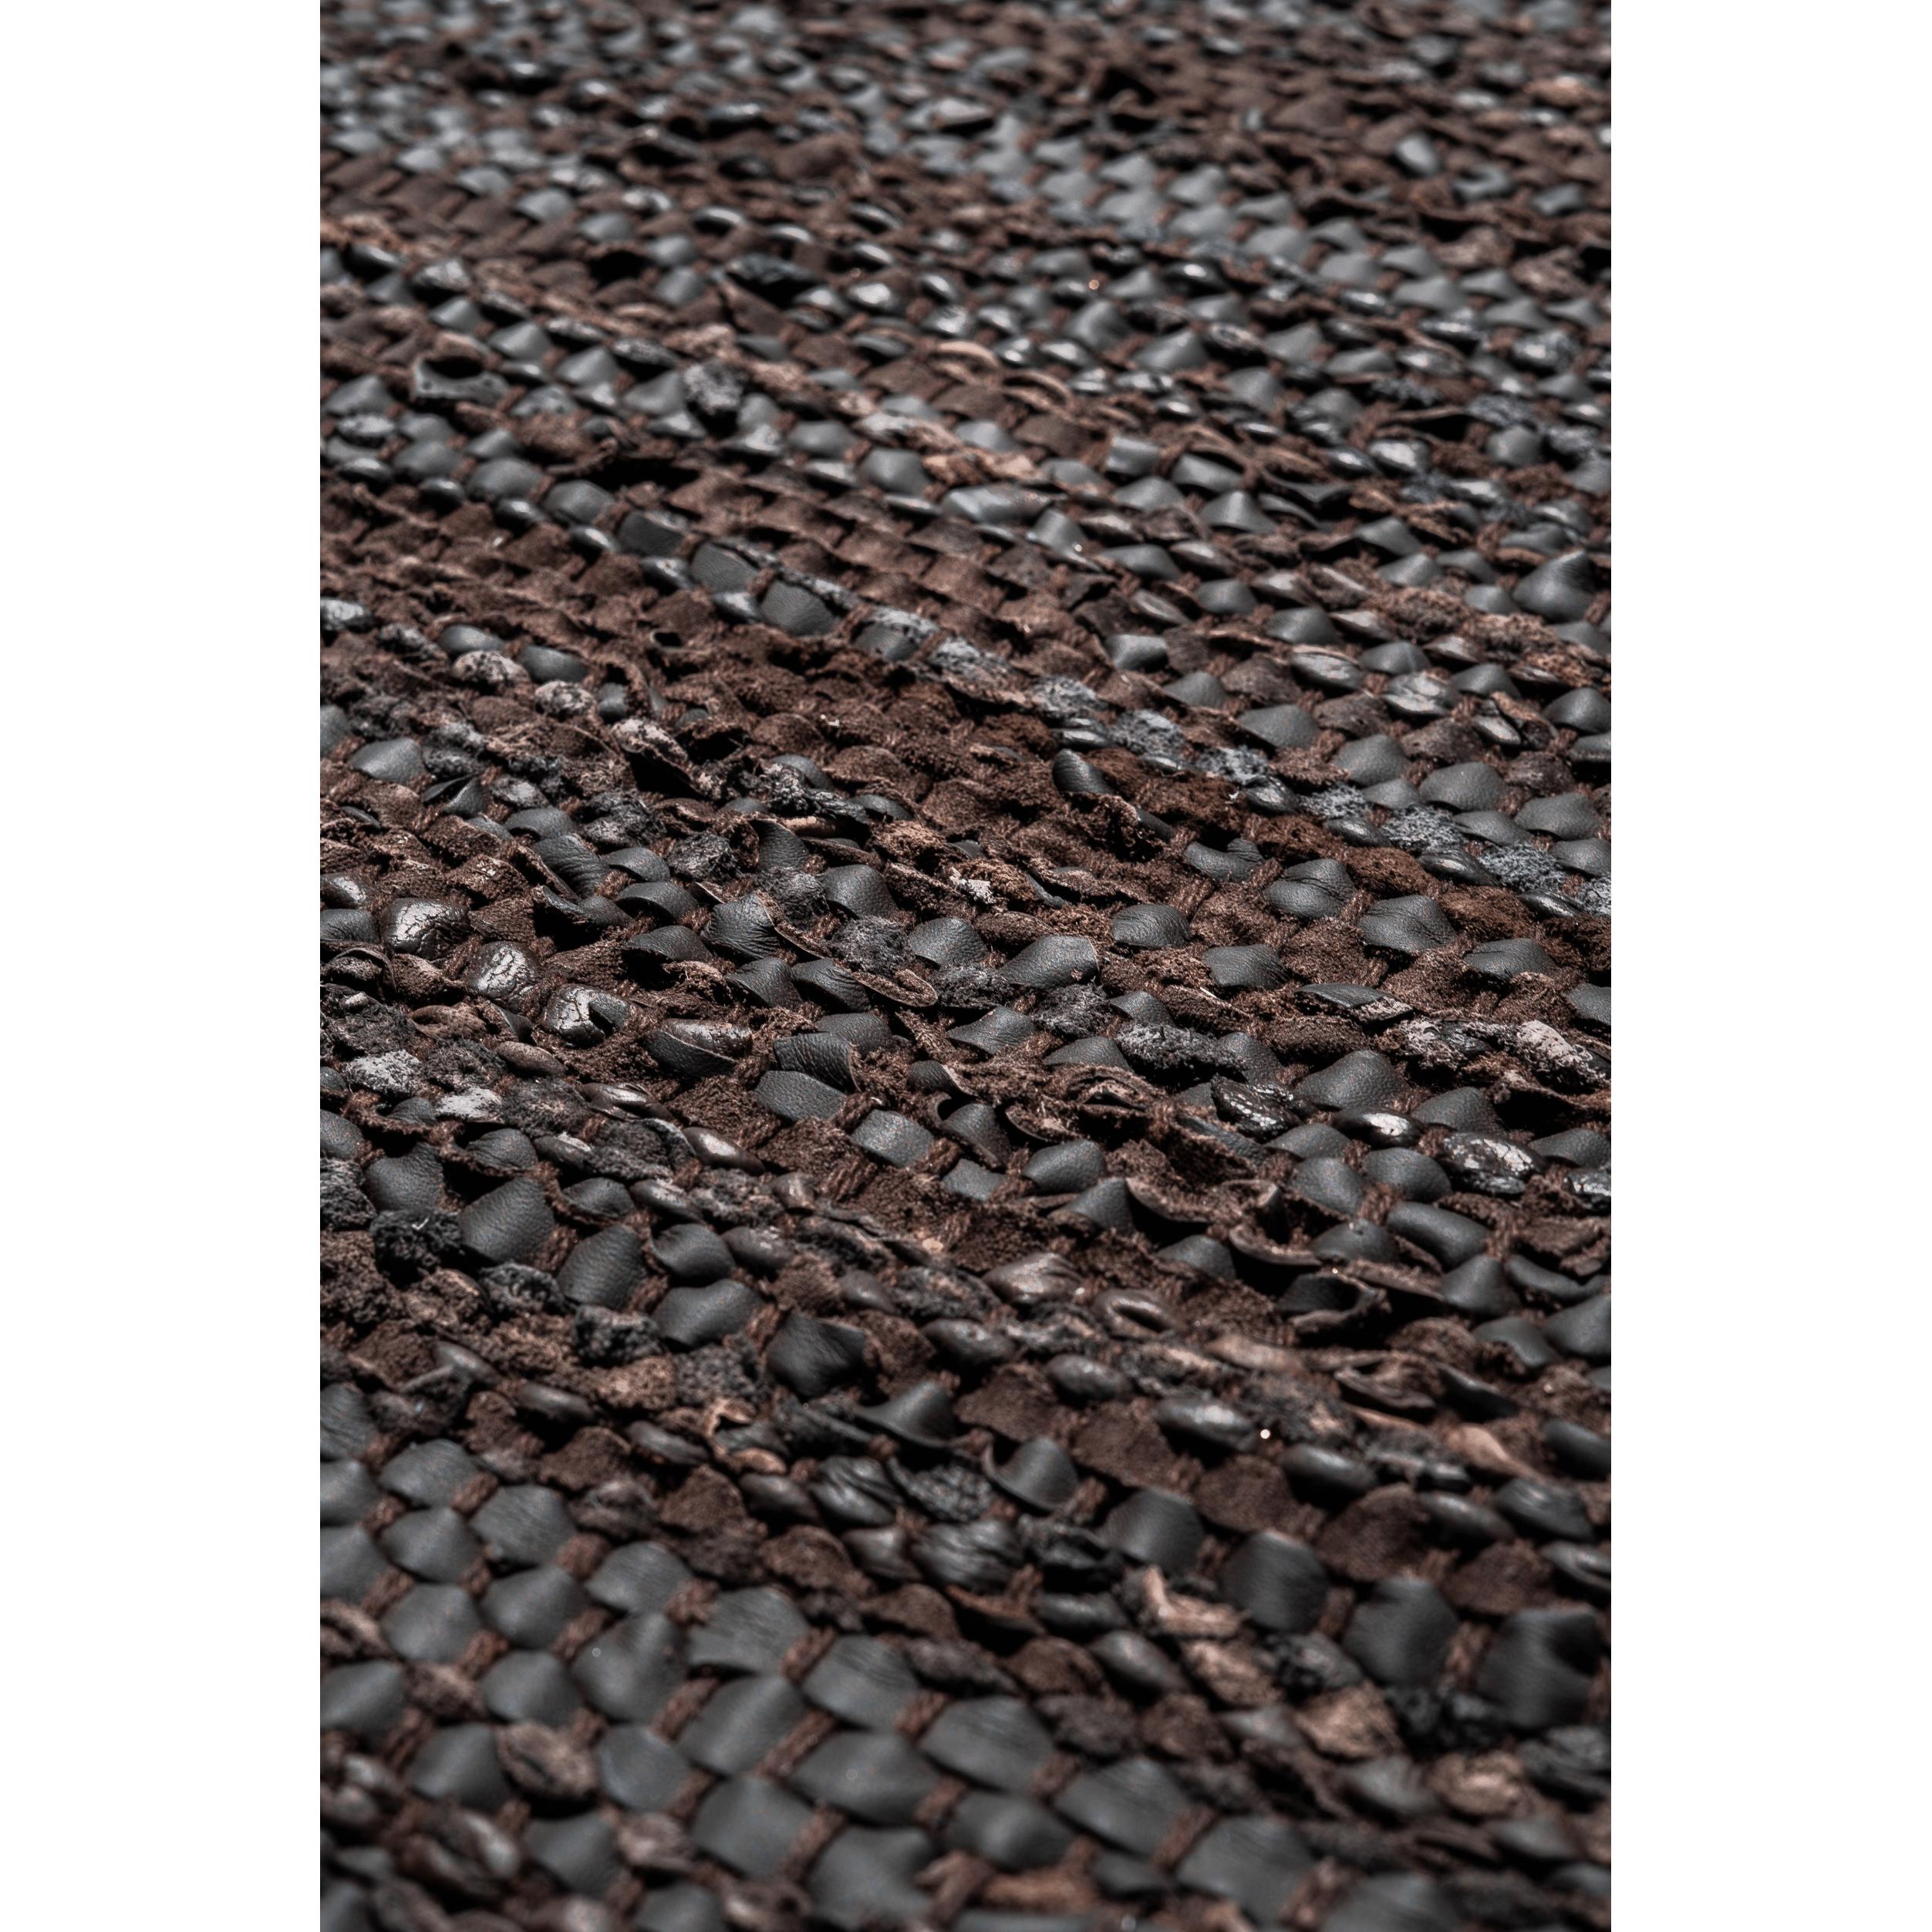 Rug Solid Leather Tæppe Choco, 200 x 300 cm